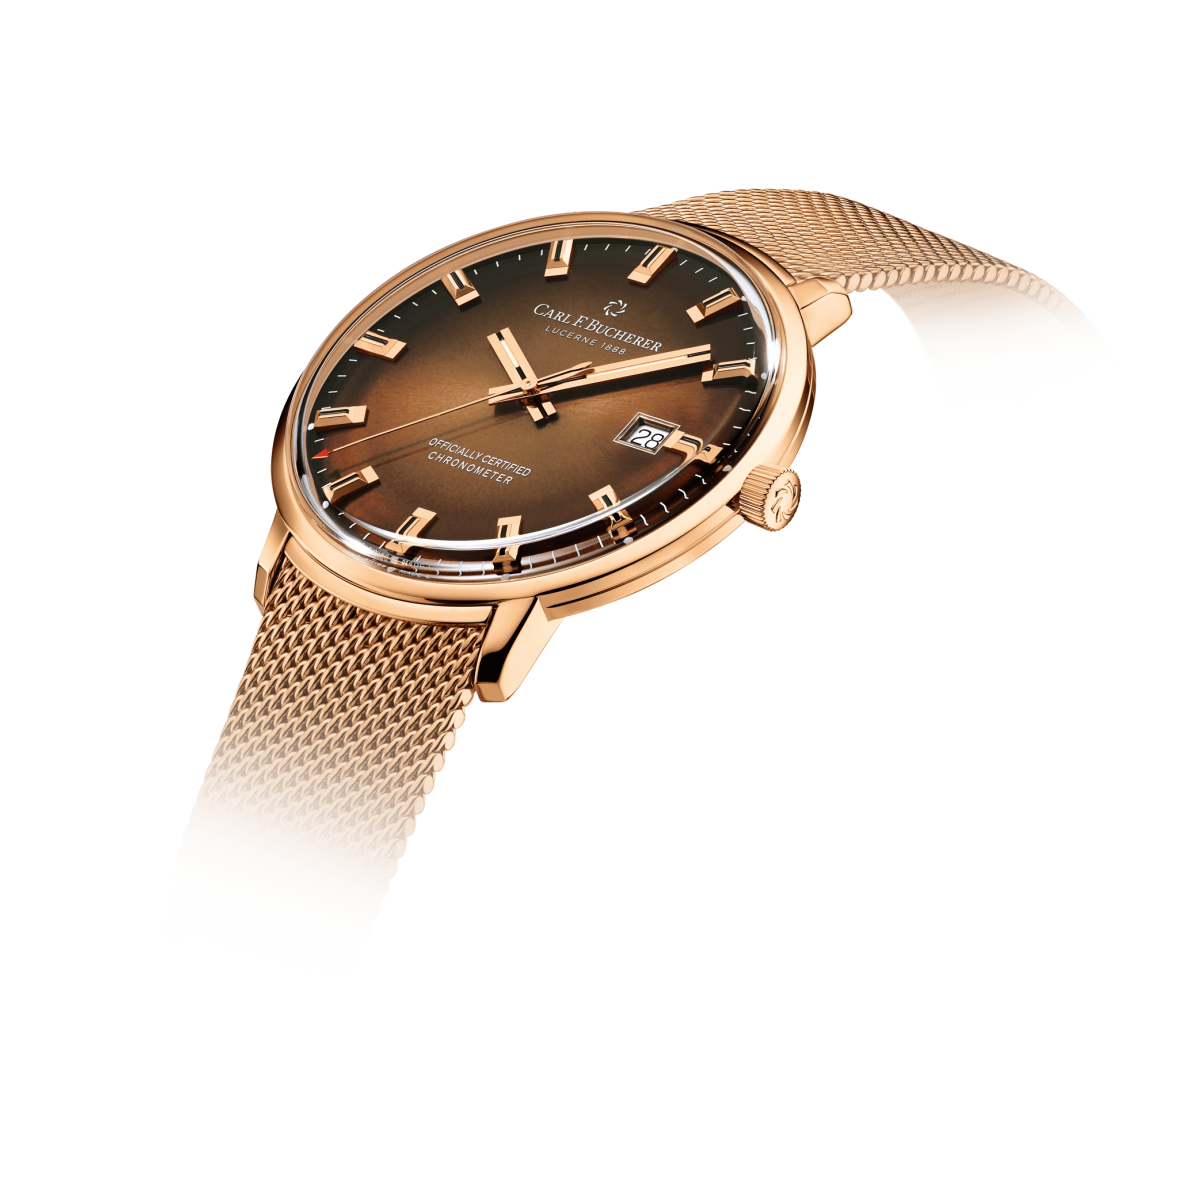 Carl F. Bucherer Haritage Chronometer 18K Rose gold Limited Edition Men's Watch